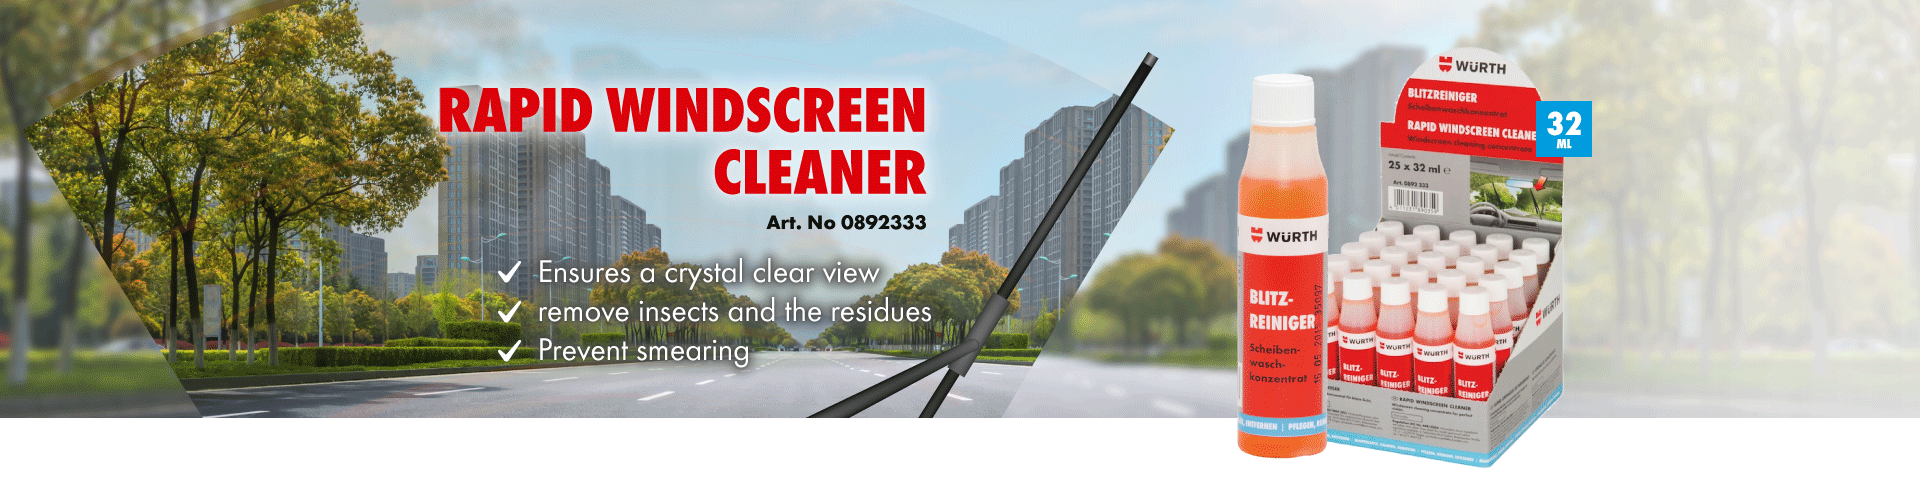 rapid windscreen cleaner_topbanner